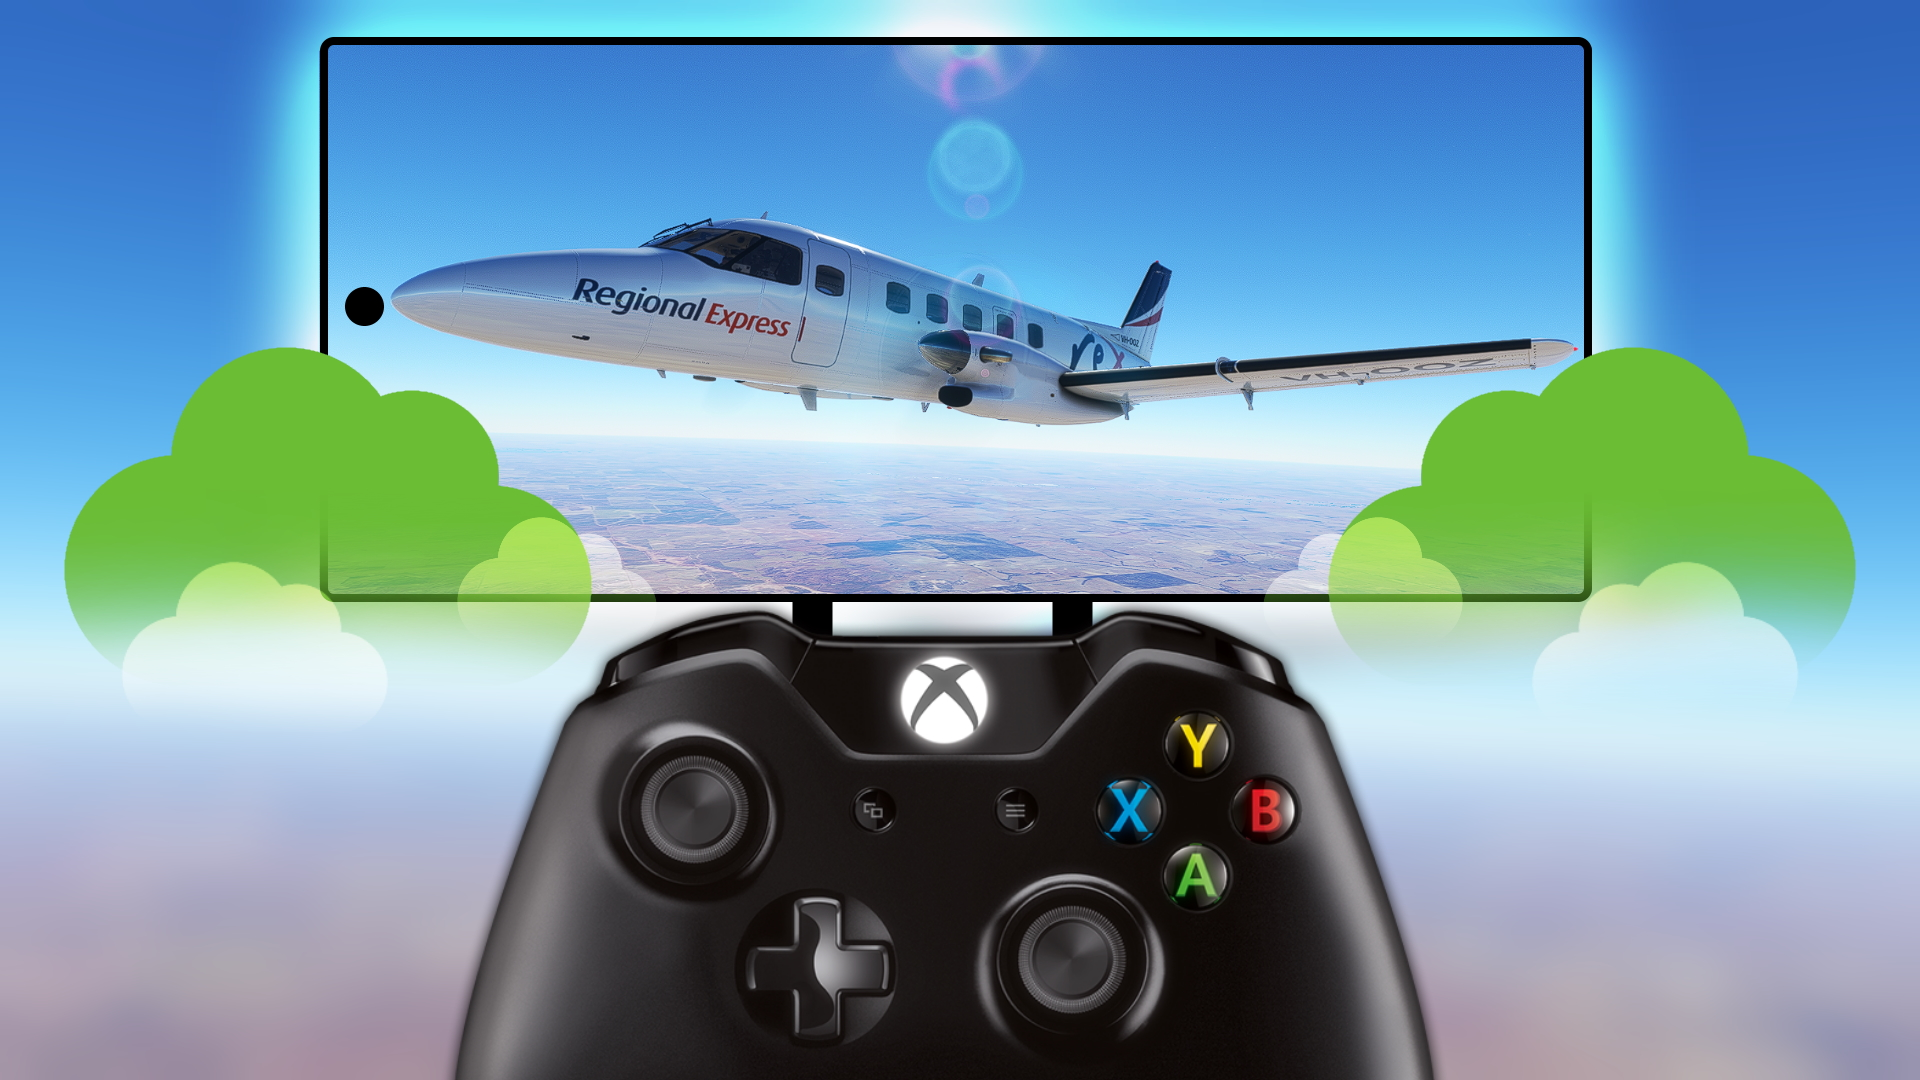 Microsoft Flight Simulator - XBox [Digital] 